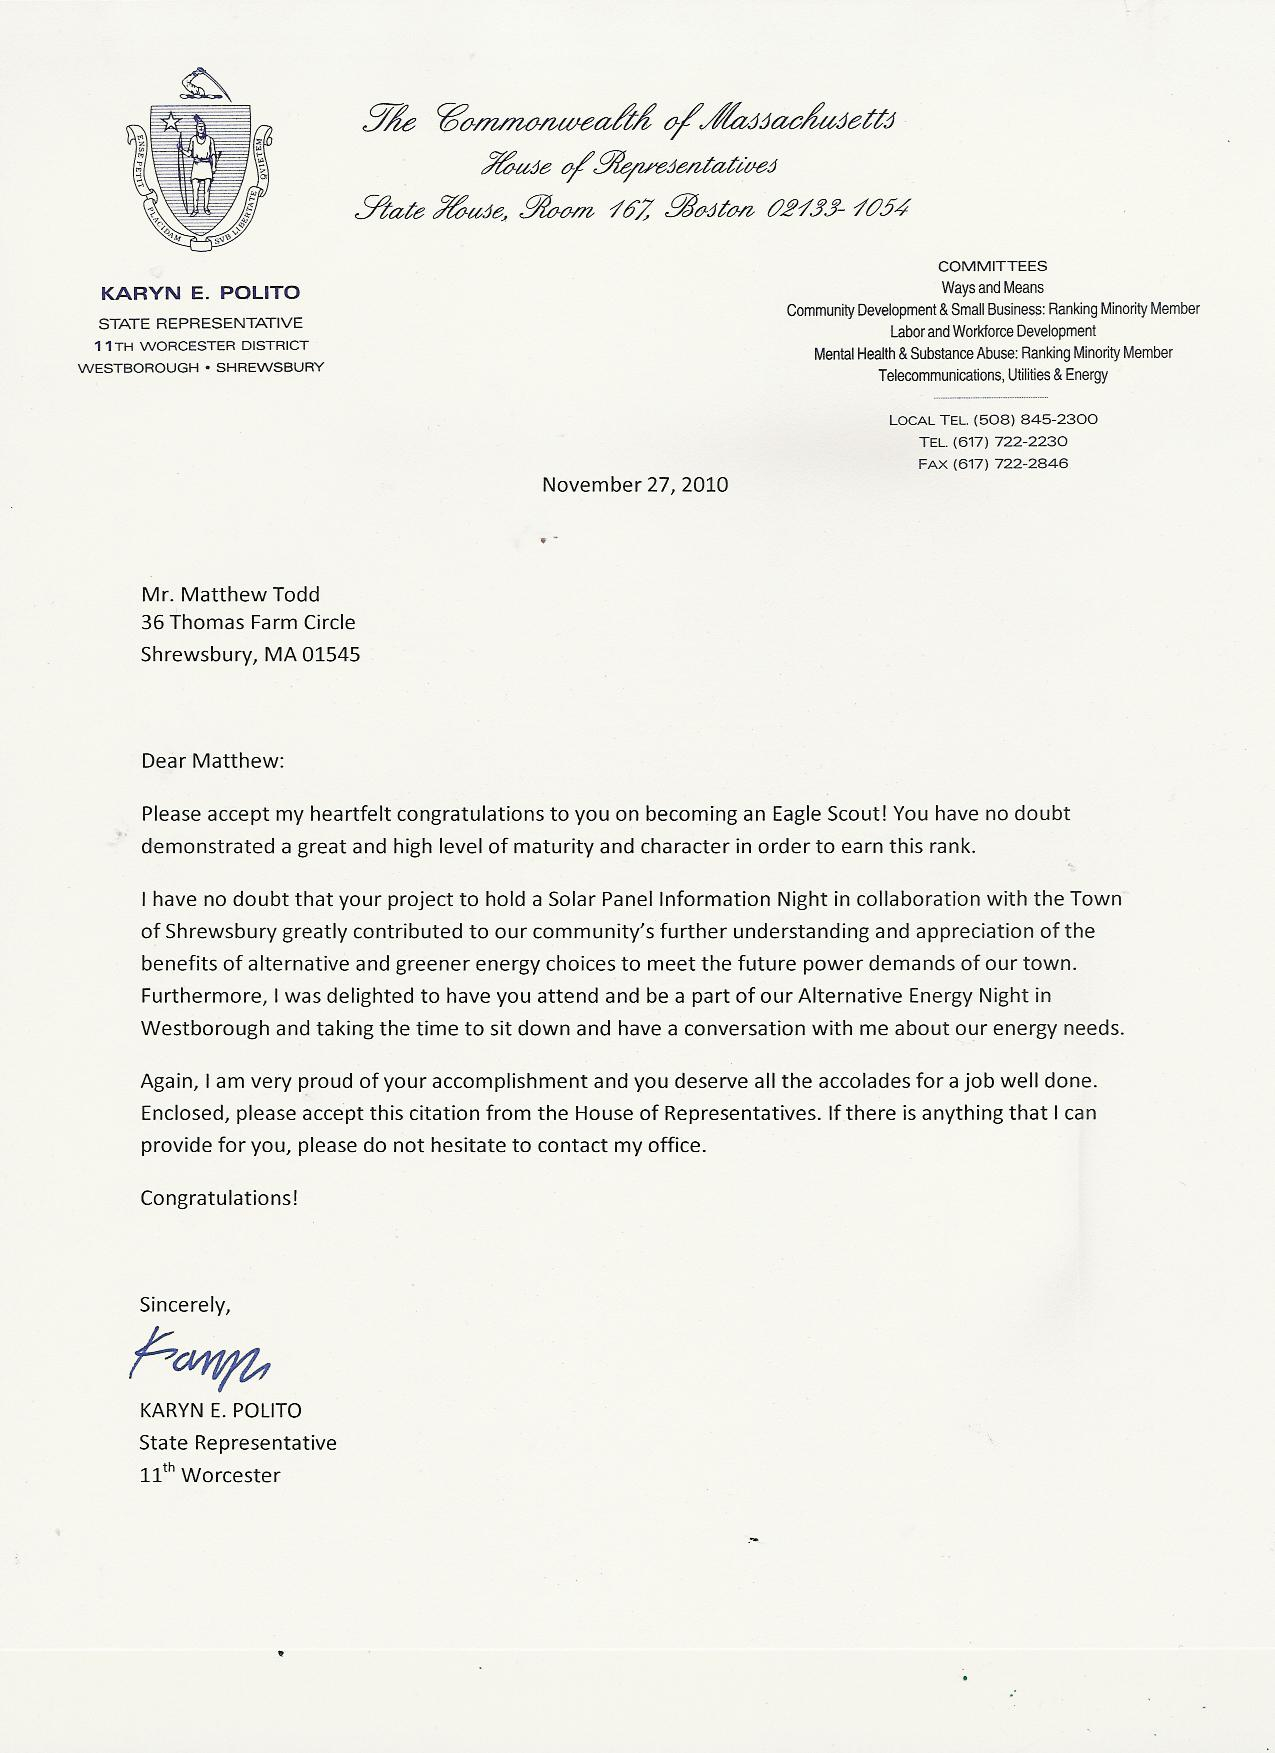 Eagle Scout Recommendation Letter Template - Boy Scout Letter Of Re Mendation for Eagle Scout Acurnamedia